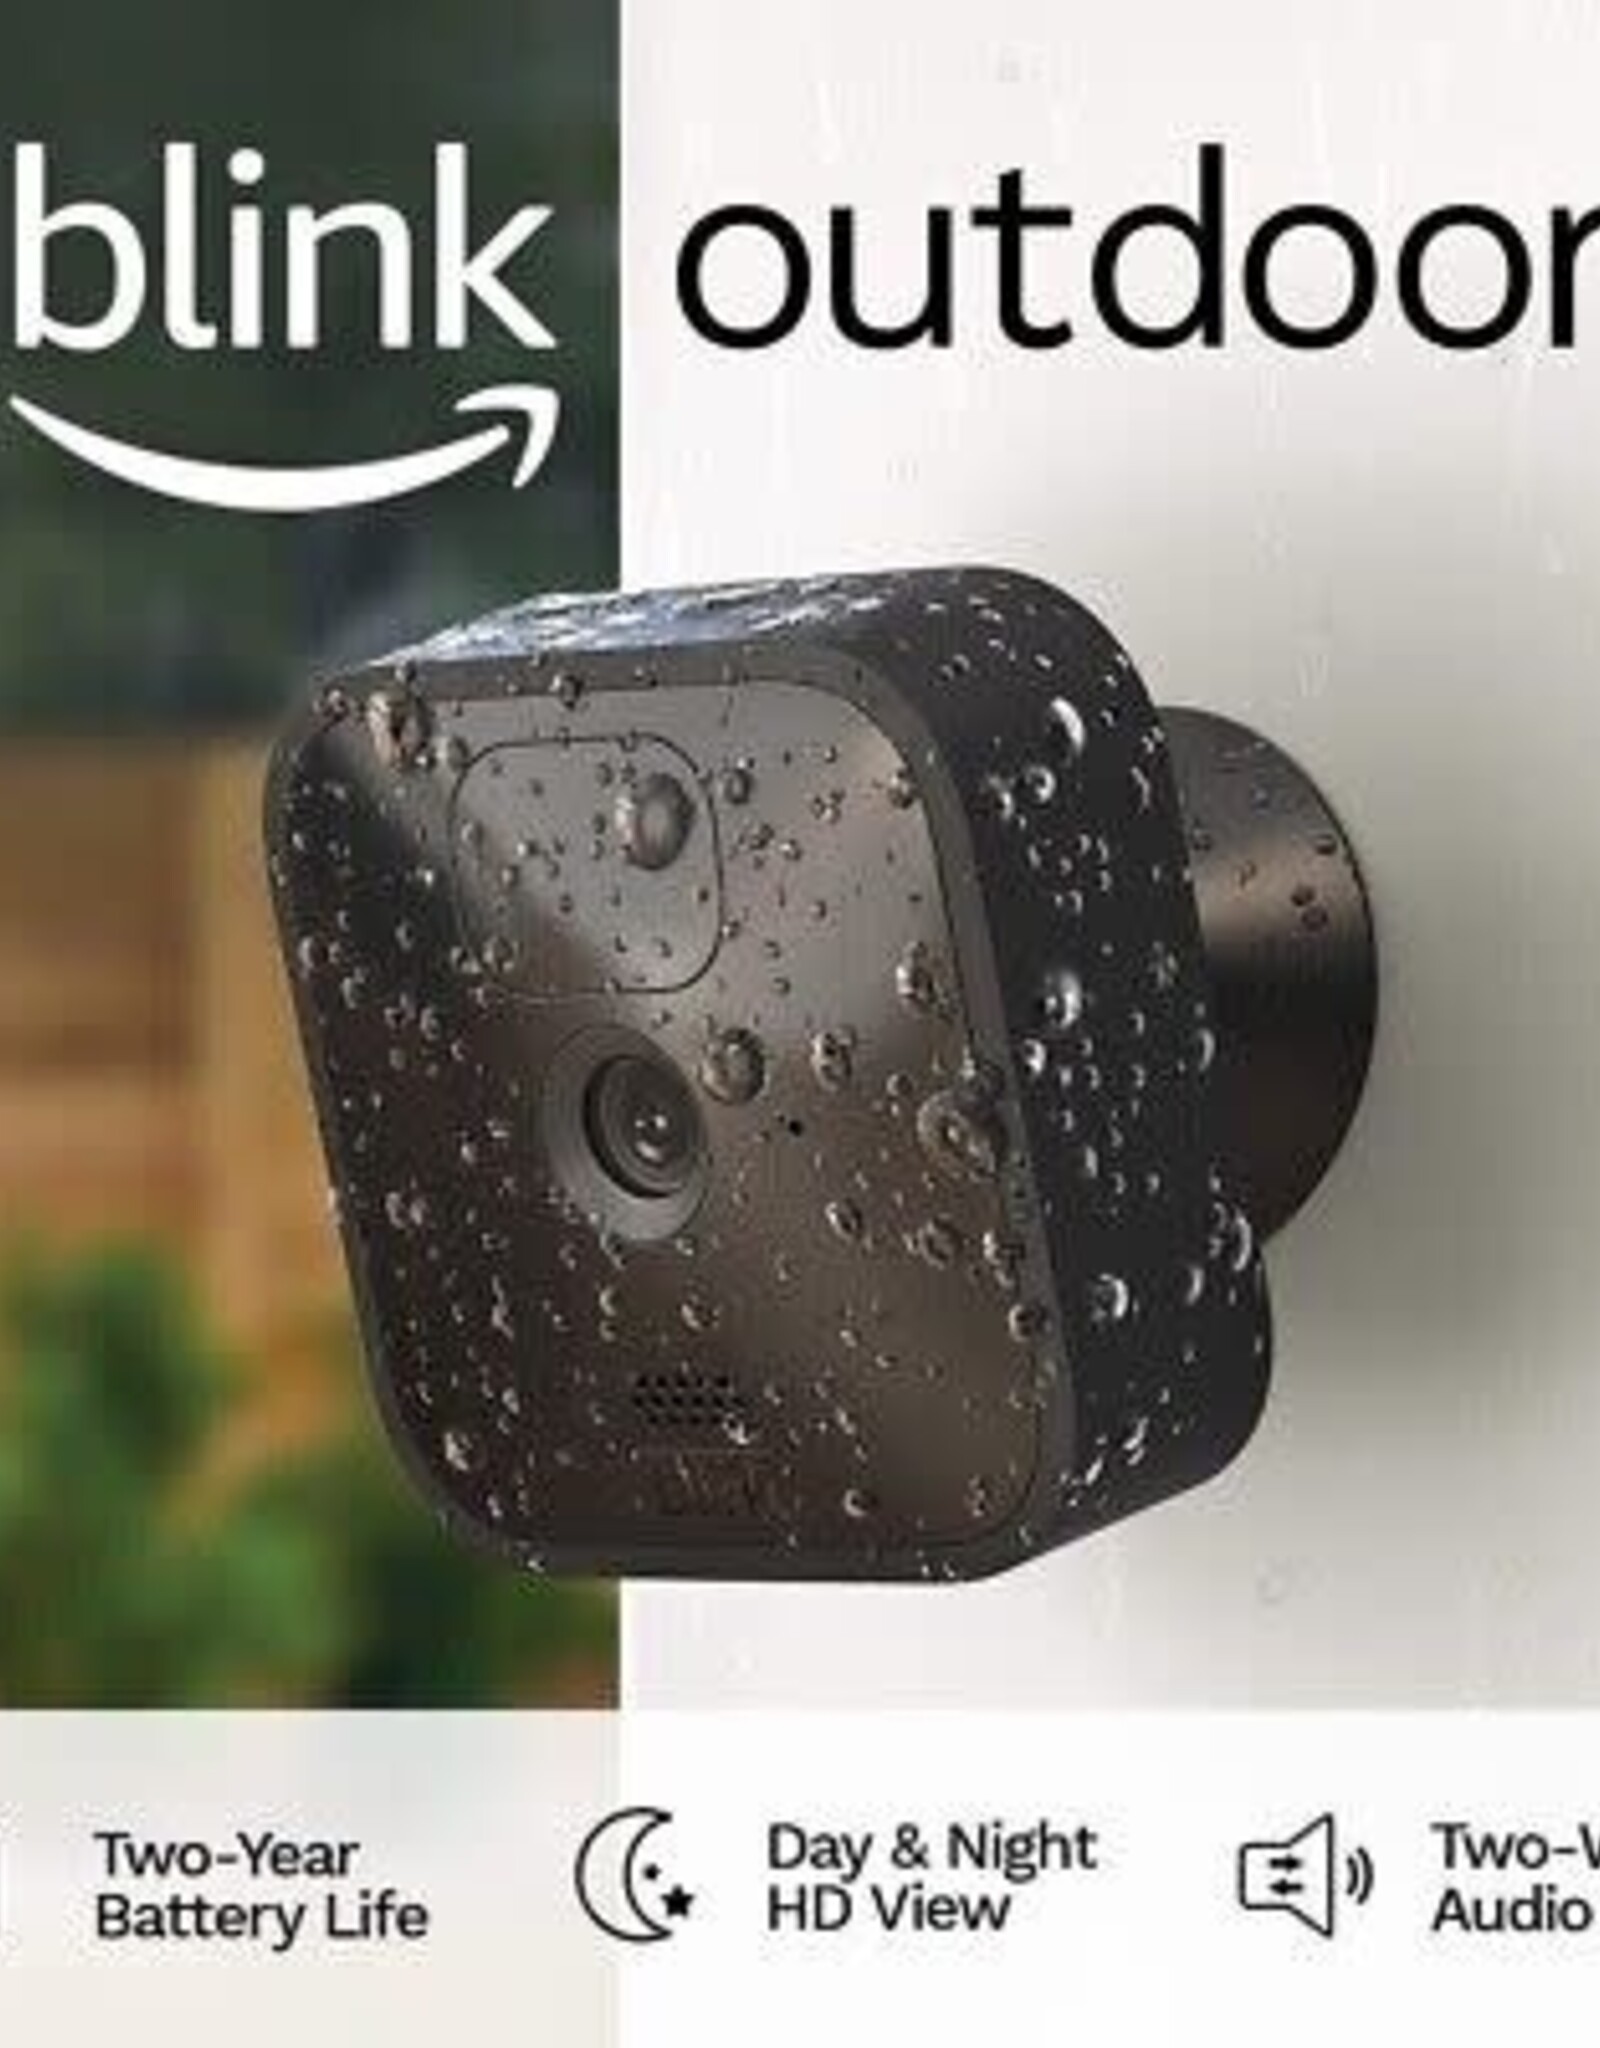 Blink Outdoor 3rd Add-on Camera (B086DKMSSM)